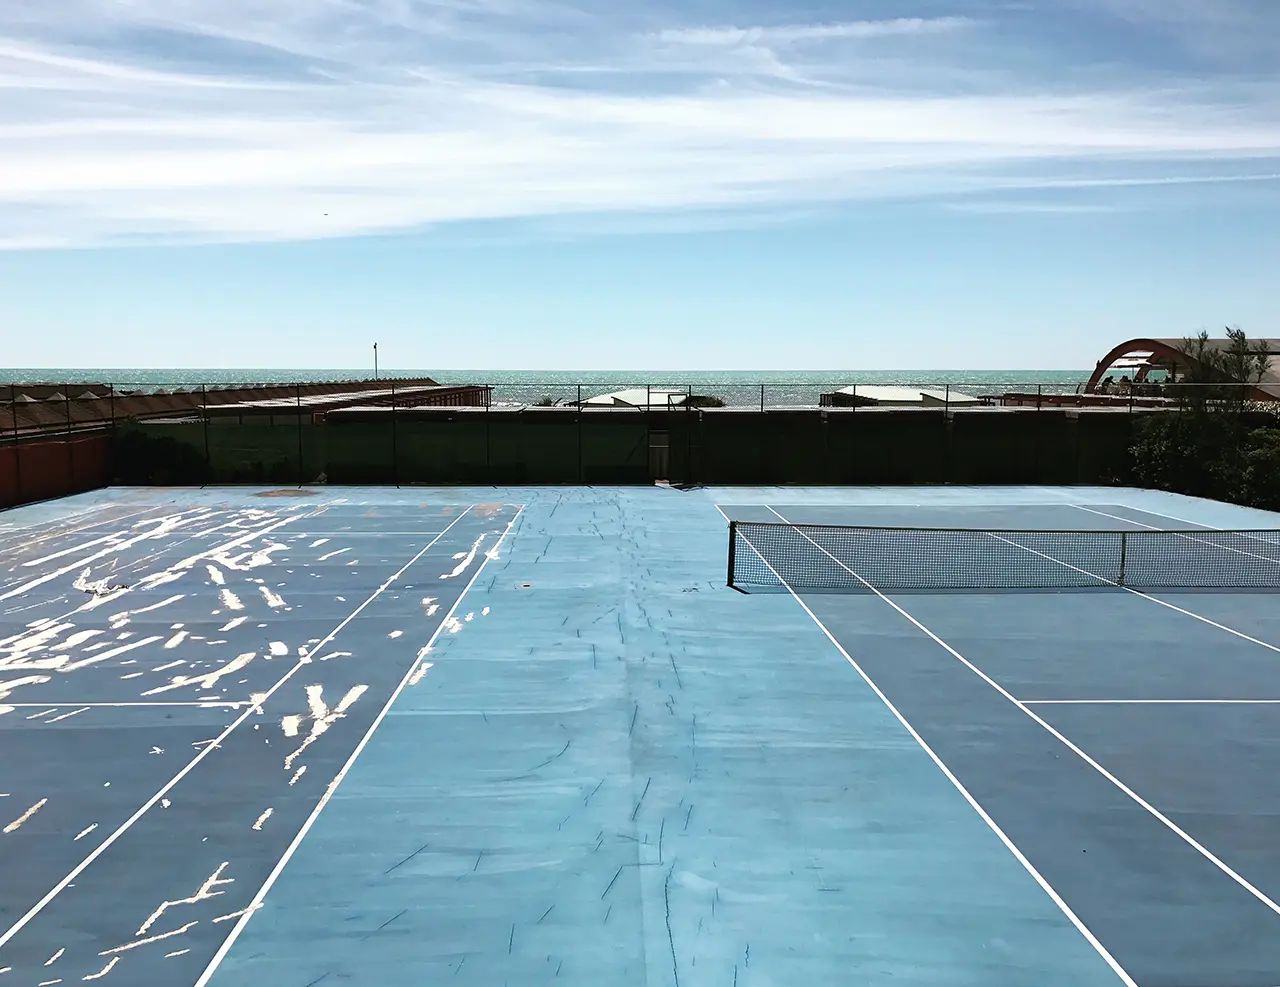 Blue Tennis Court - iPhone 7S- Ostia seaside (Rome), 2018.